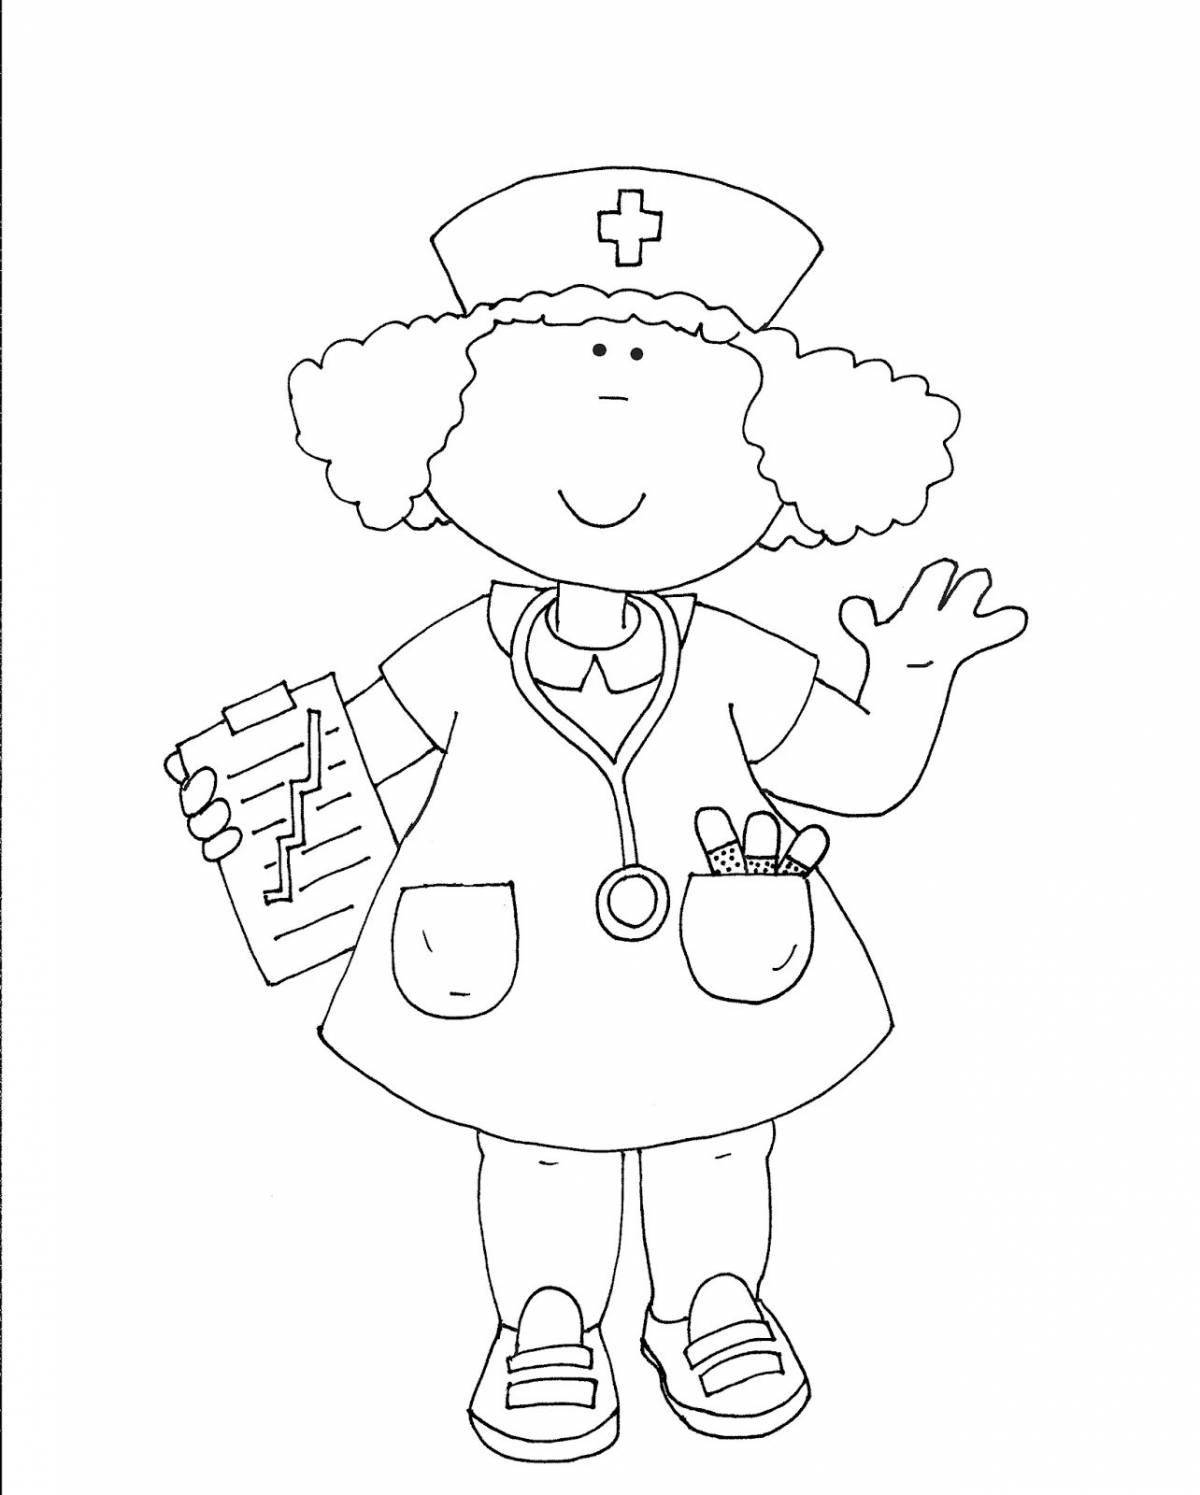 Playful nurse coloring page